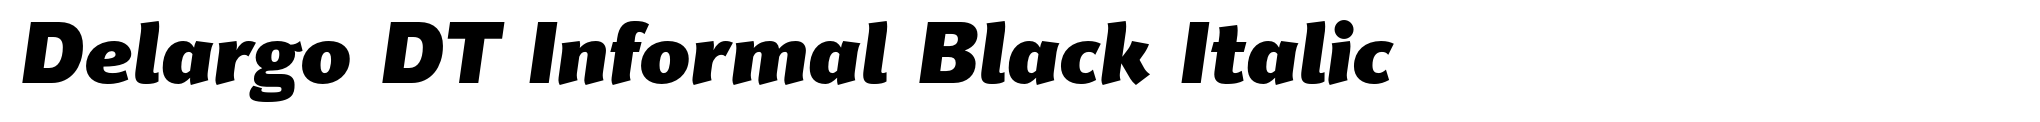 Delargo DT Informal Black Italic image